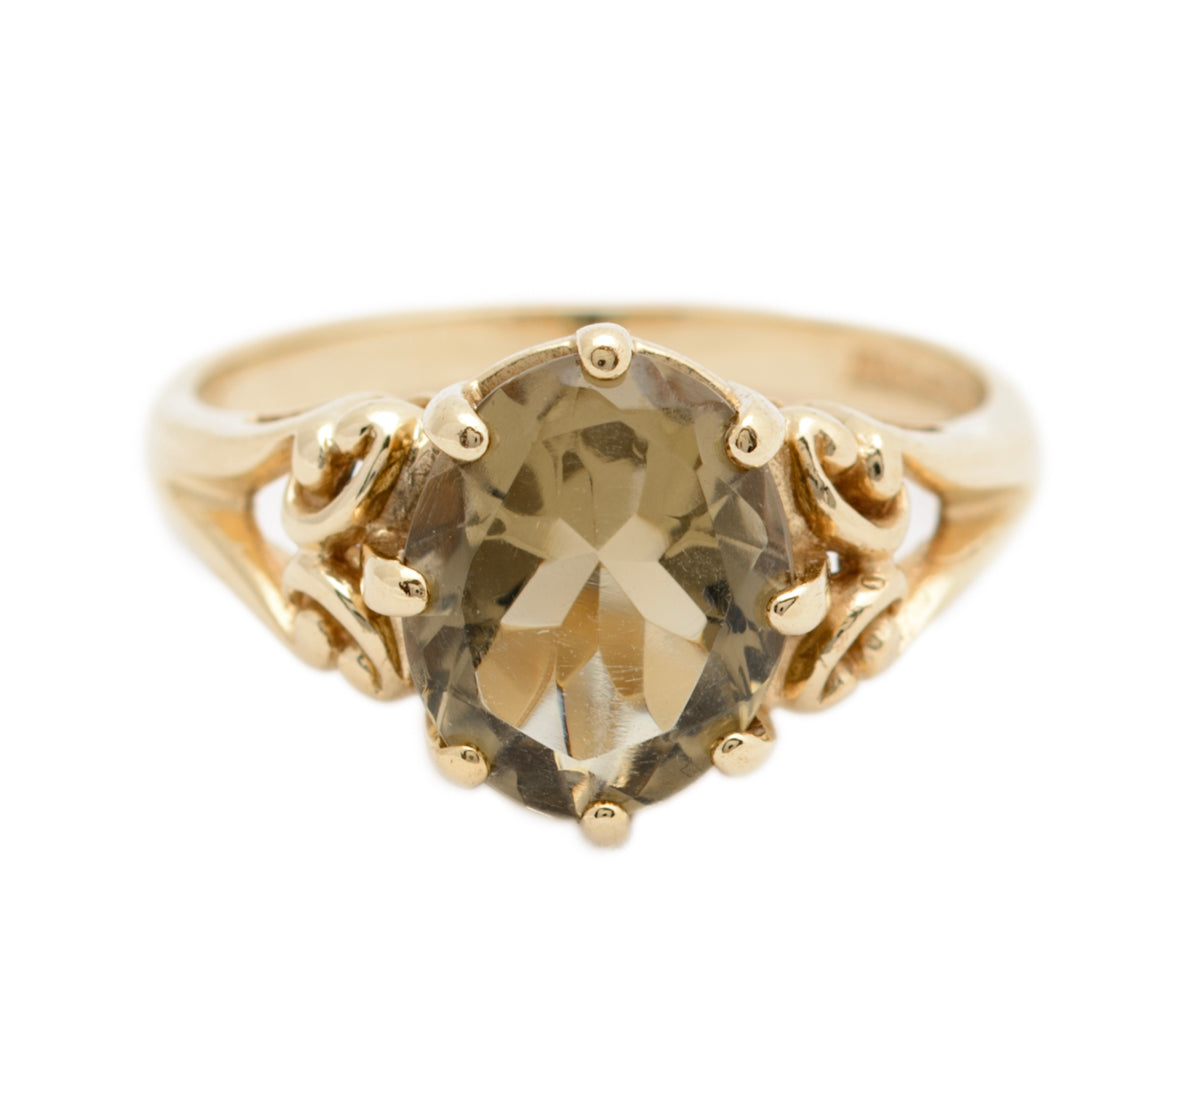 Vintage 9ct Gold Ring With Smoky Citrine Gemstone Hallmarked 1992 (A1748)